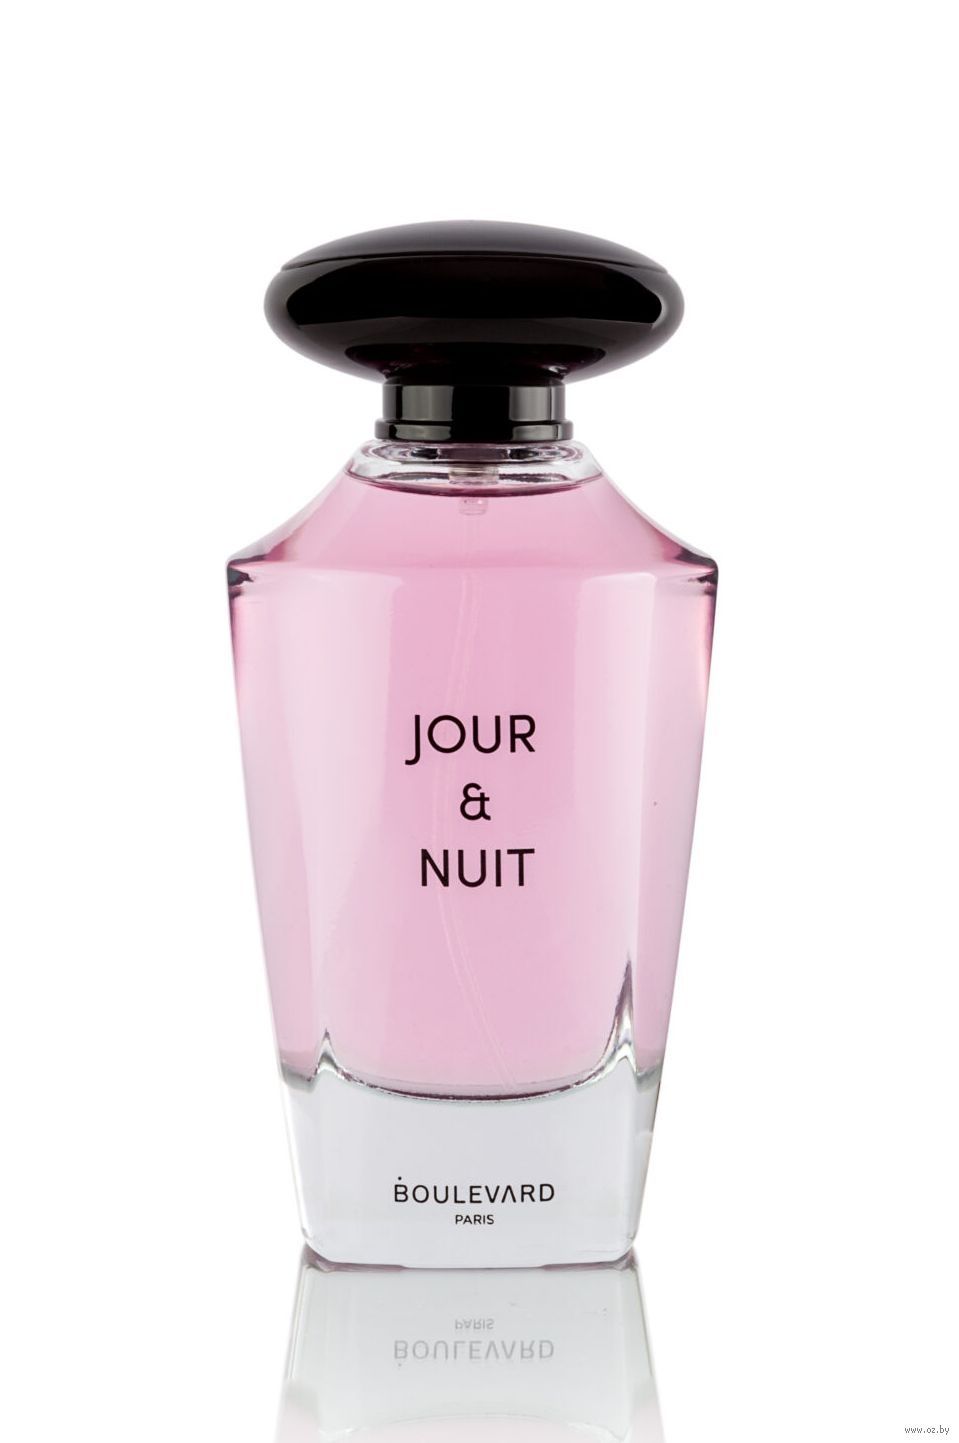 Boulevard Jour Nuit парфюмерная вода для женщин 100 мл